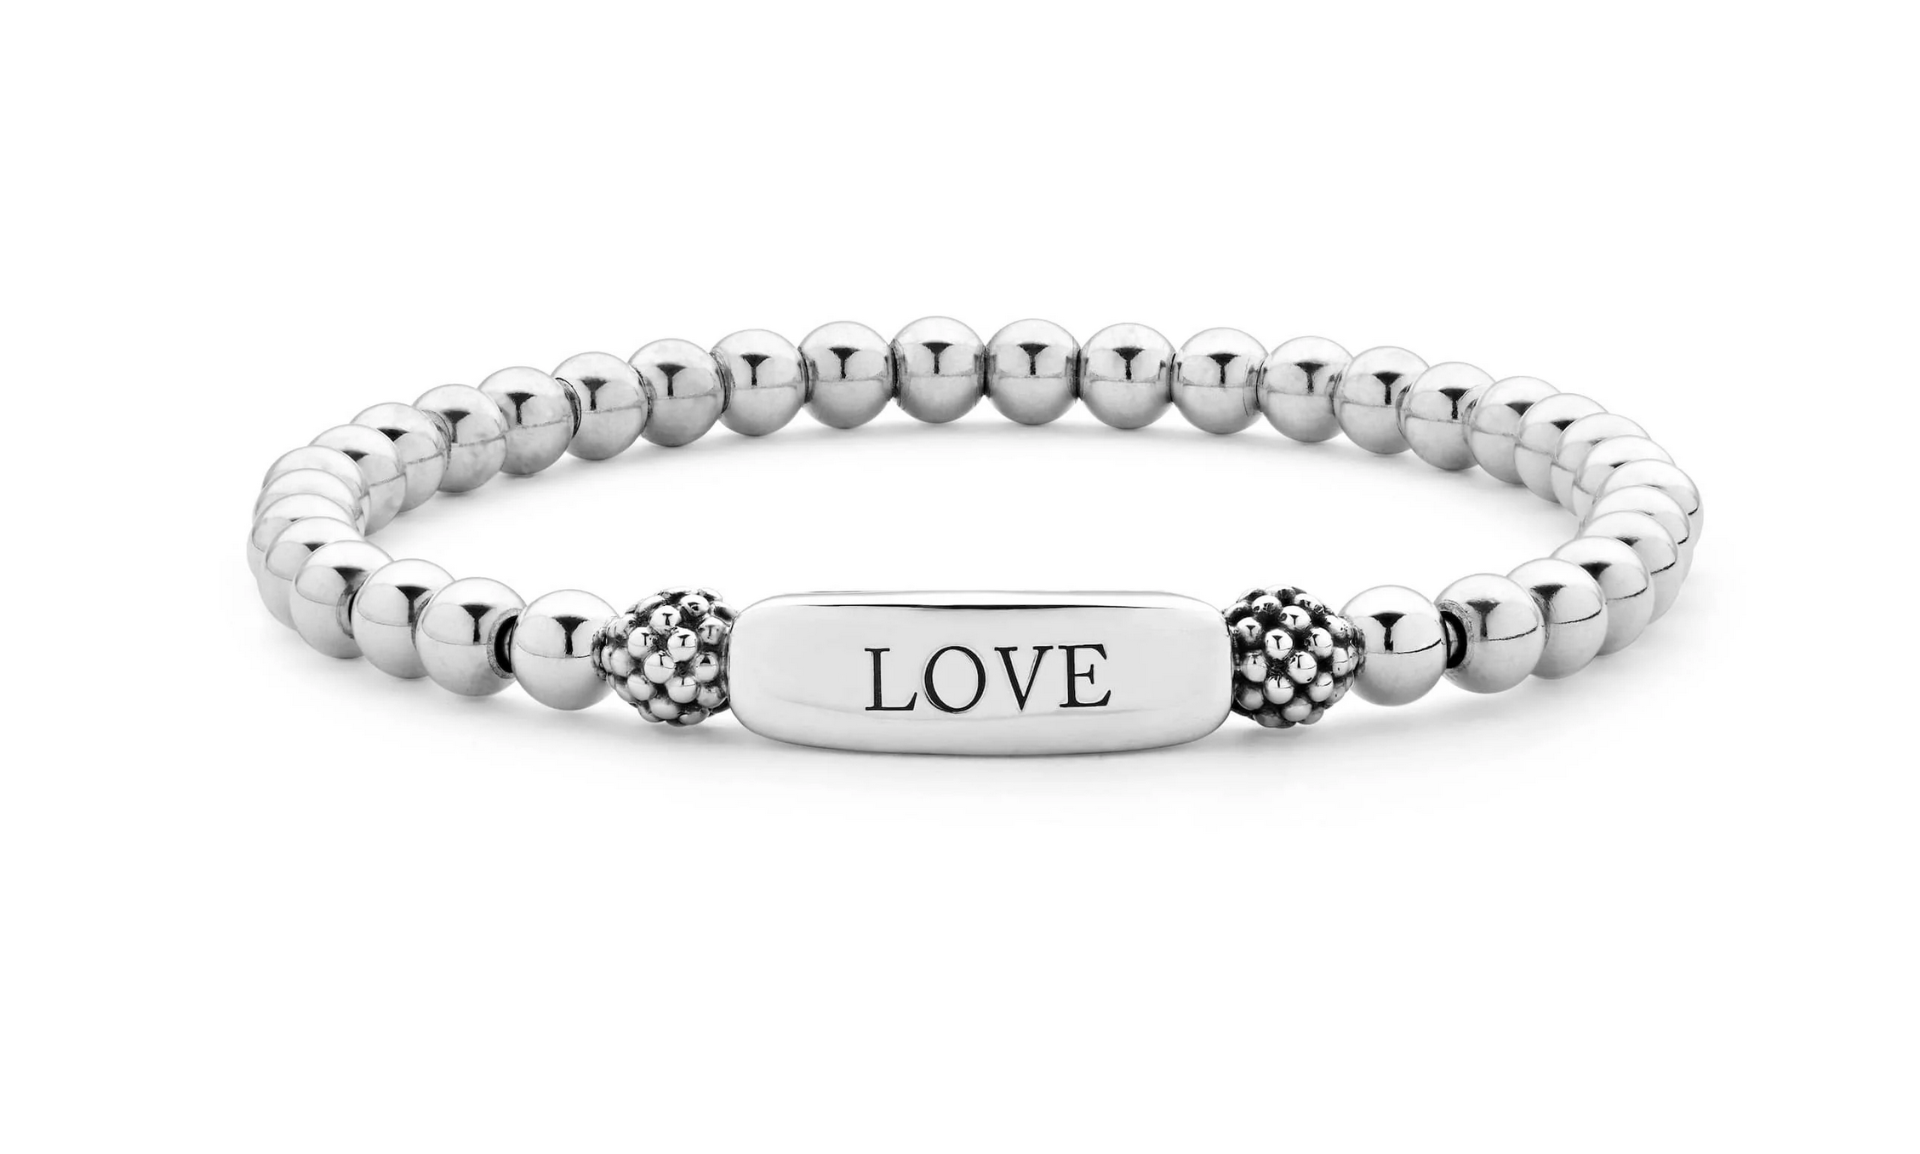 LAGOS "Signature Caviar" Stretch Bead Love Bracelet